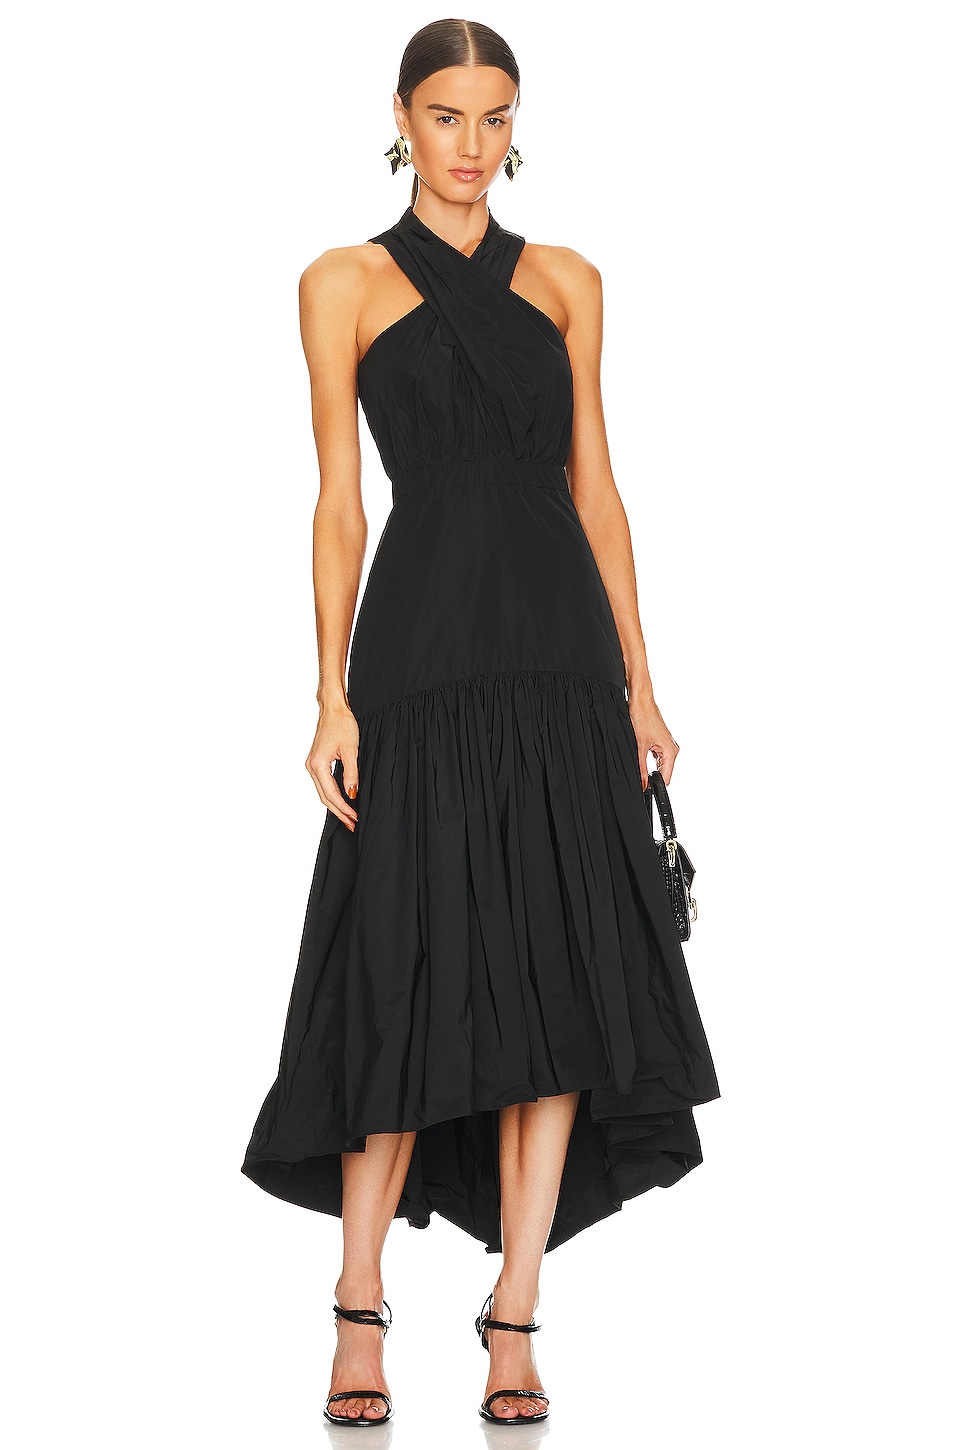 Veronica Beard Radley Dress in Black